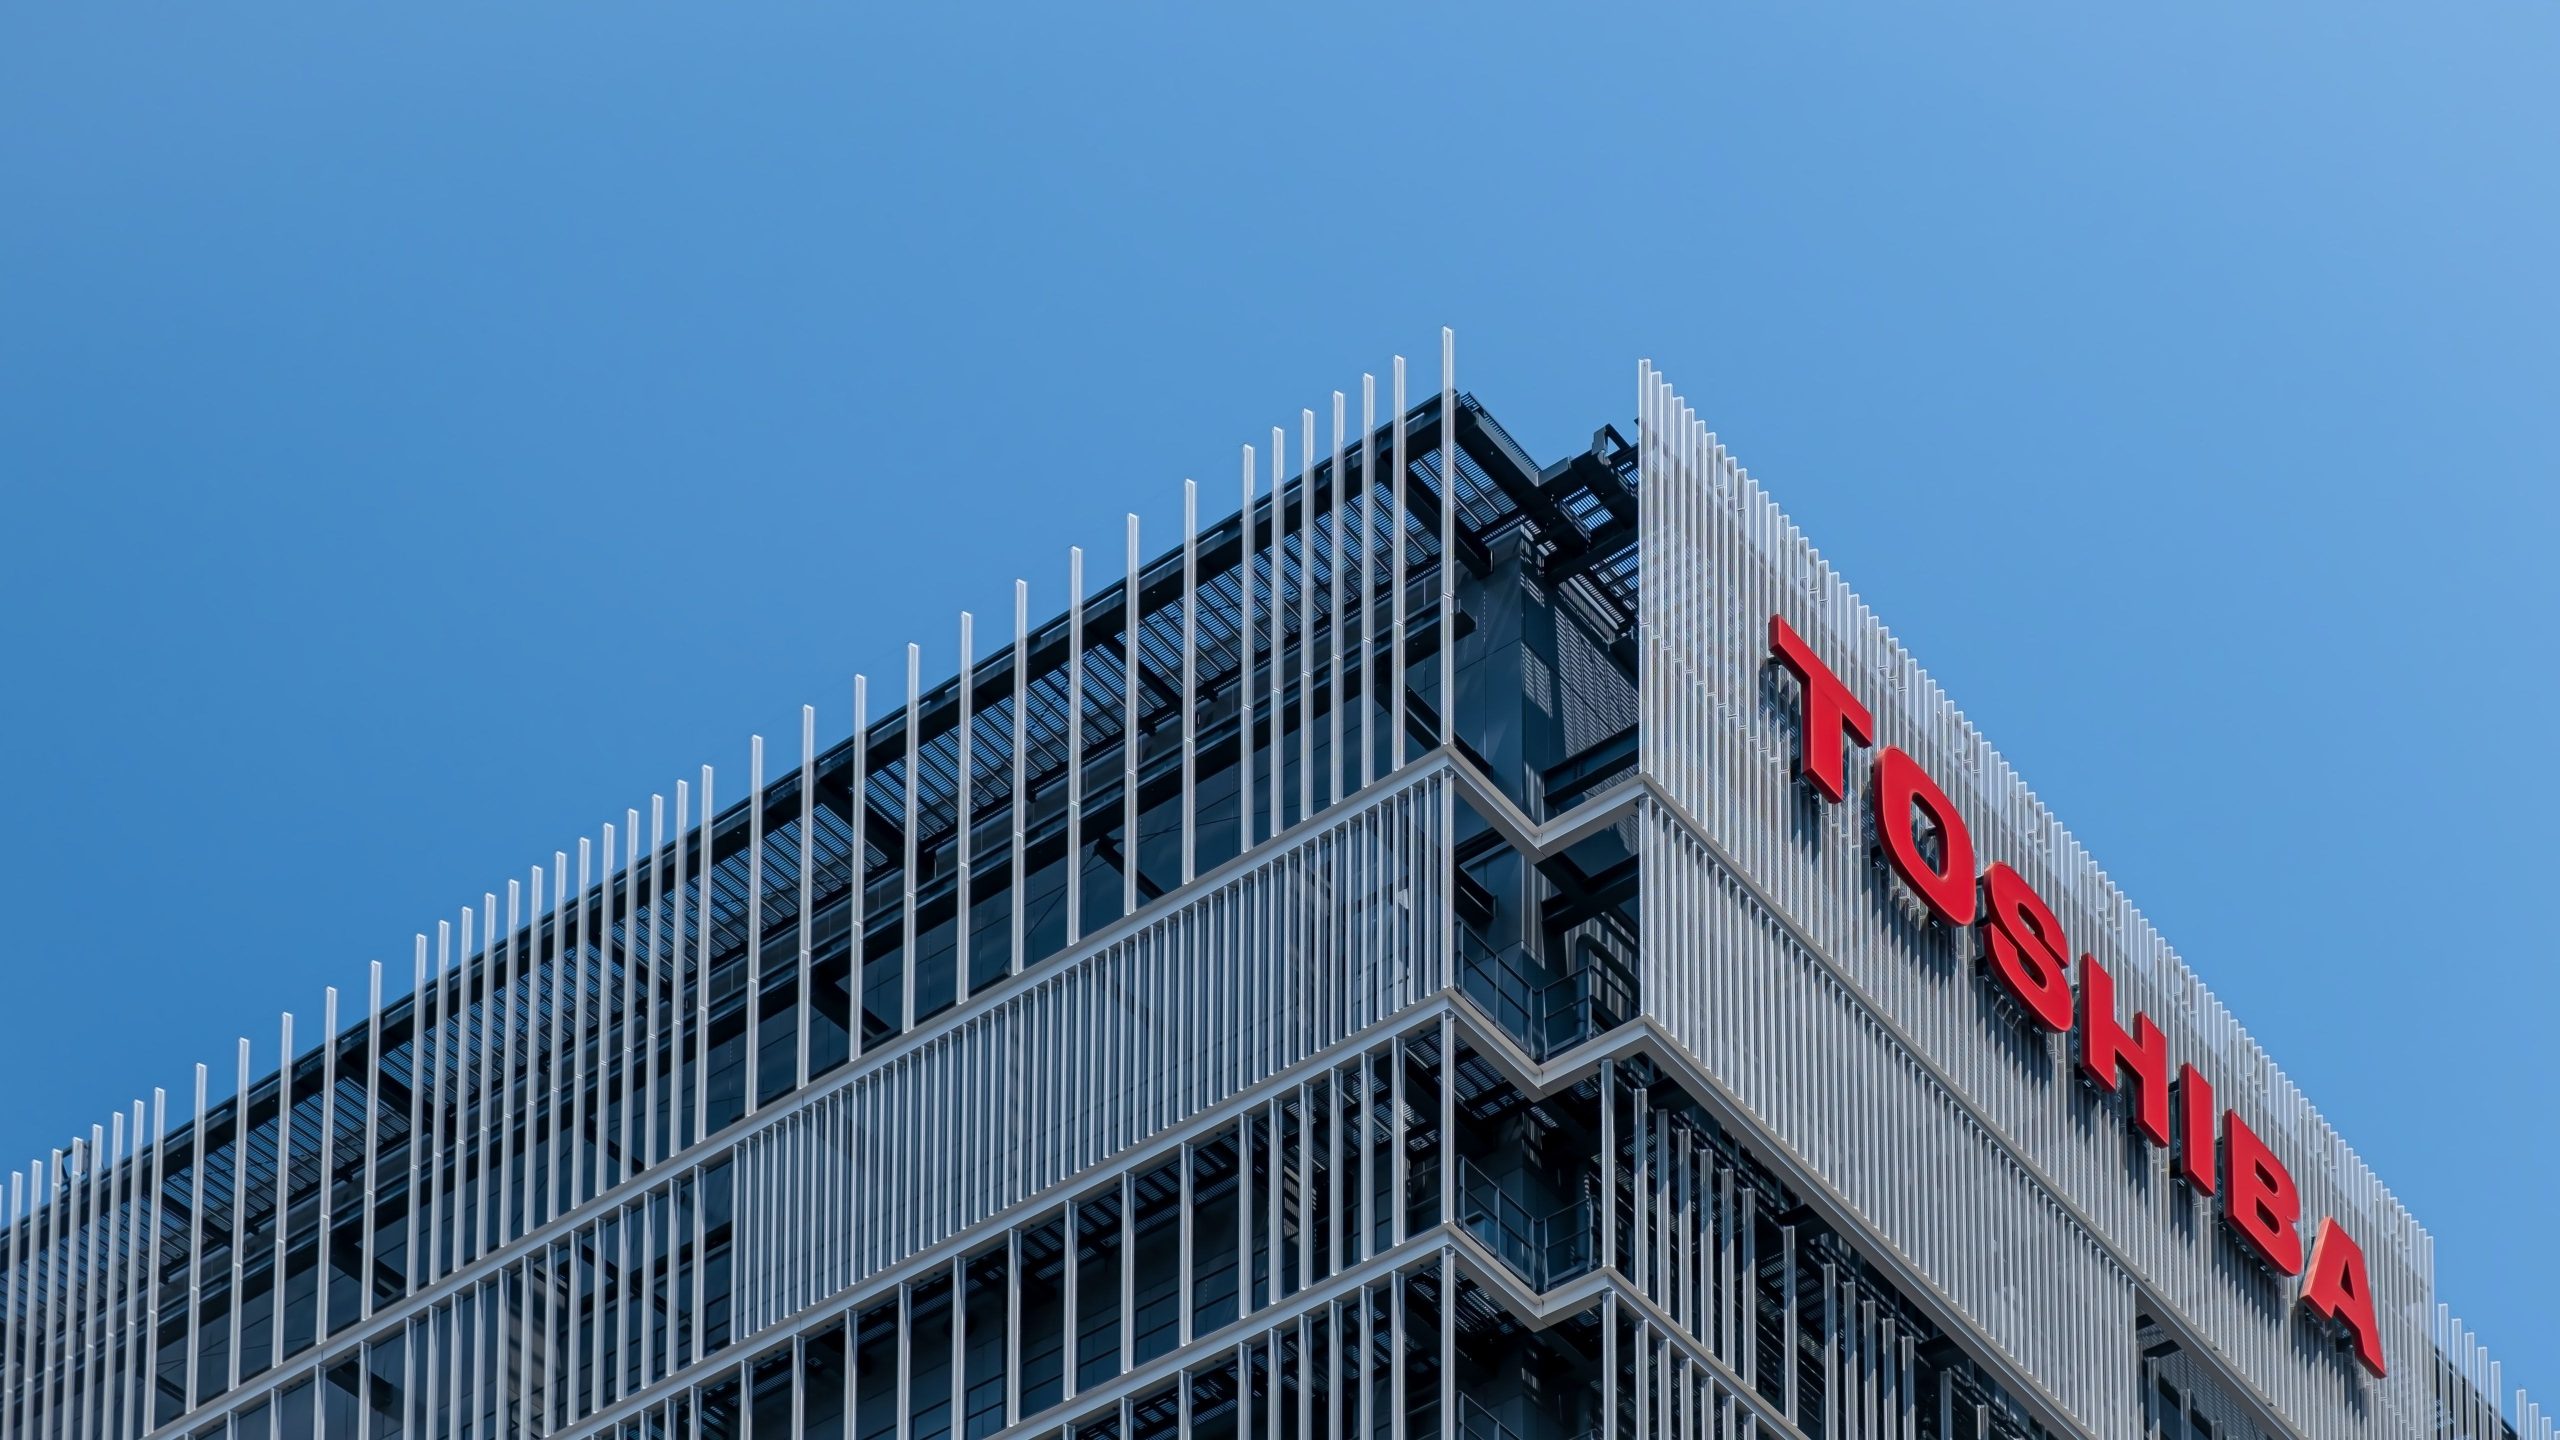 JIP in talks to acquire Toshiba for $16 billion, Asia’s biggest takeover